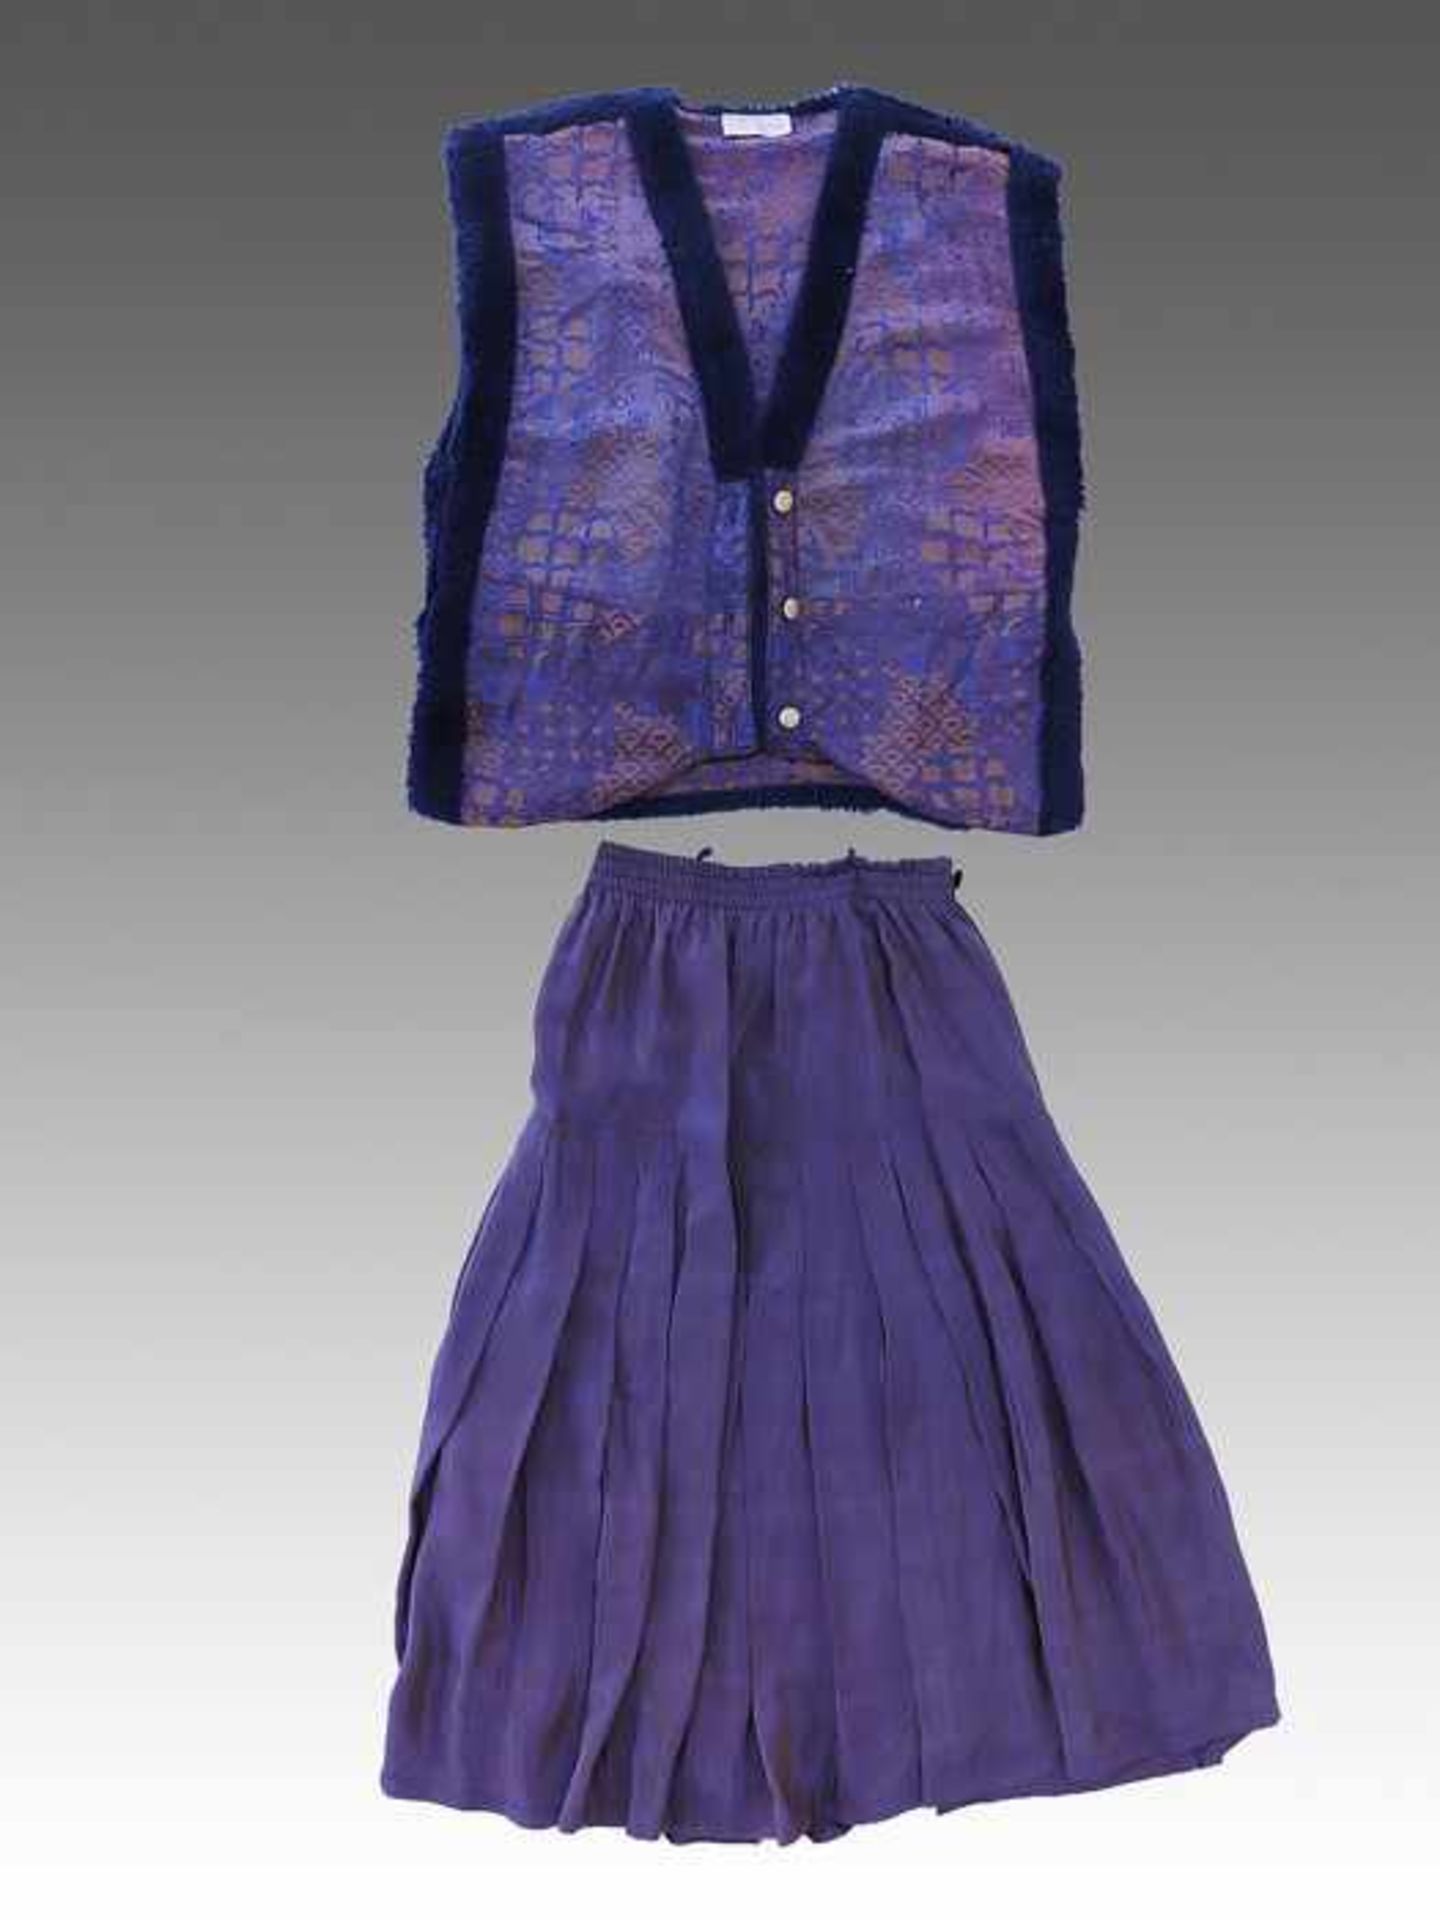 Tiffany exclusiv - Kostüm1980er J., Vintage, 1 Rock, 1 Weste, 1 Blusenjacke, lila changierend, - Bild 3 aus 4